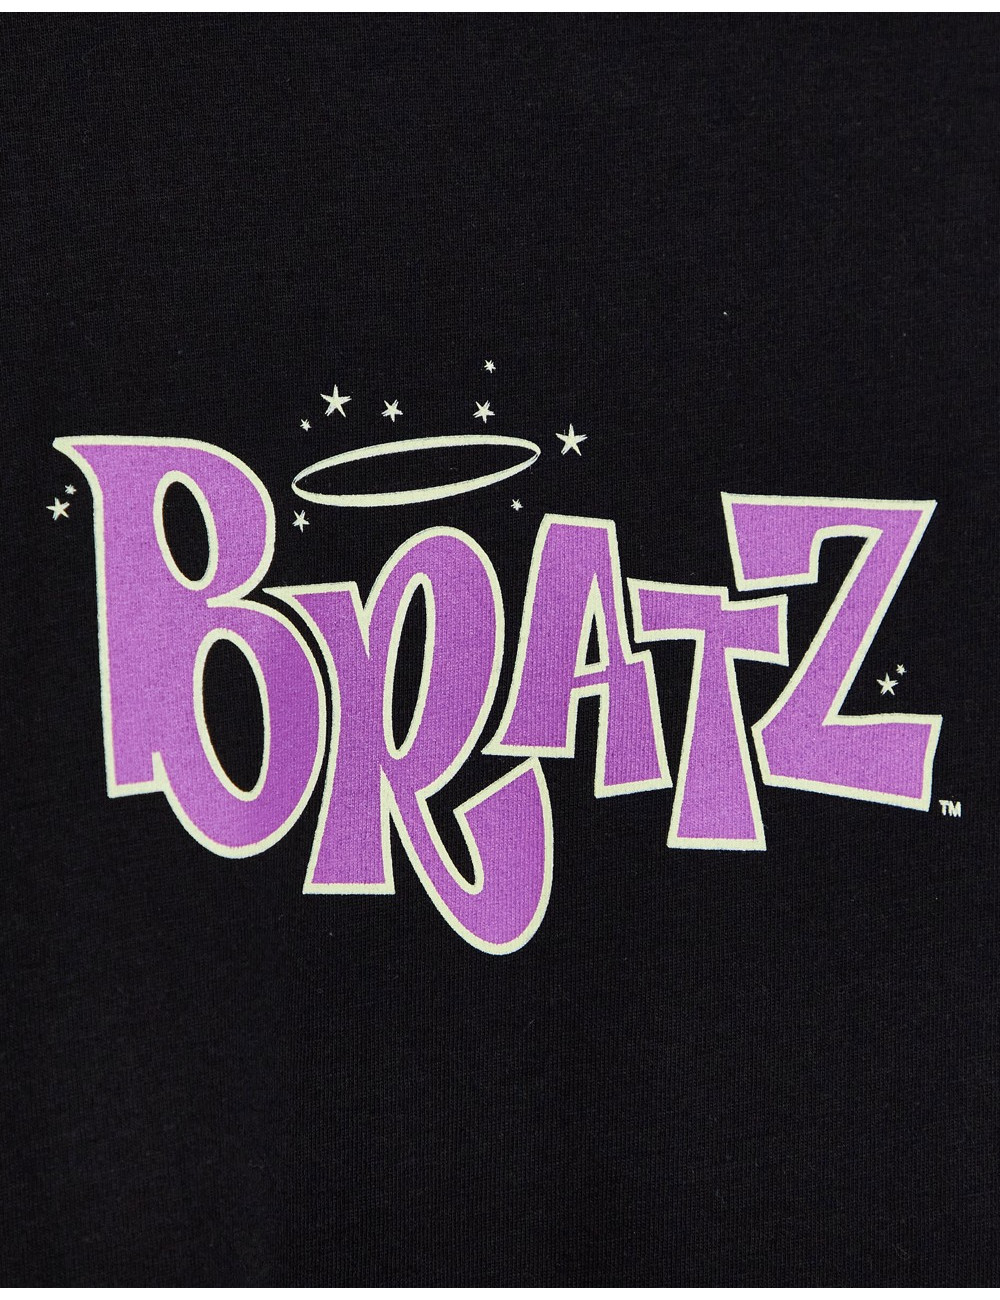 Bratz Logo t-shirt in black